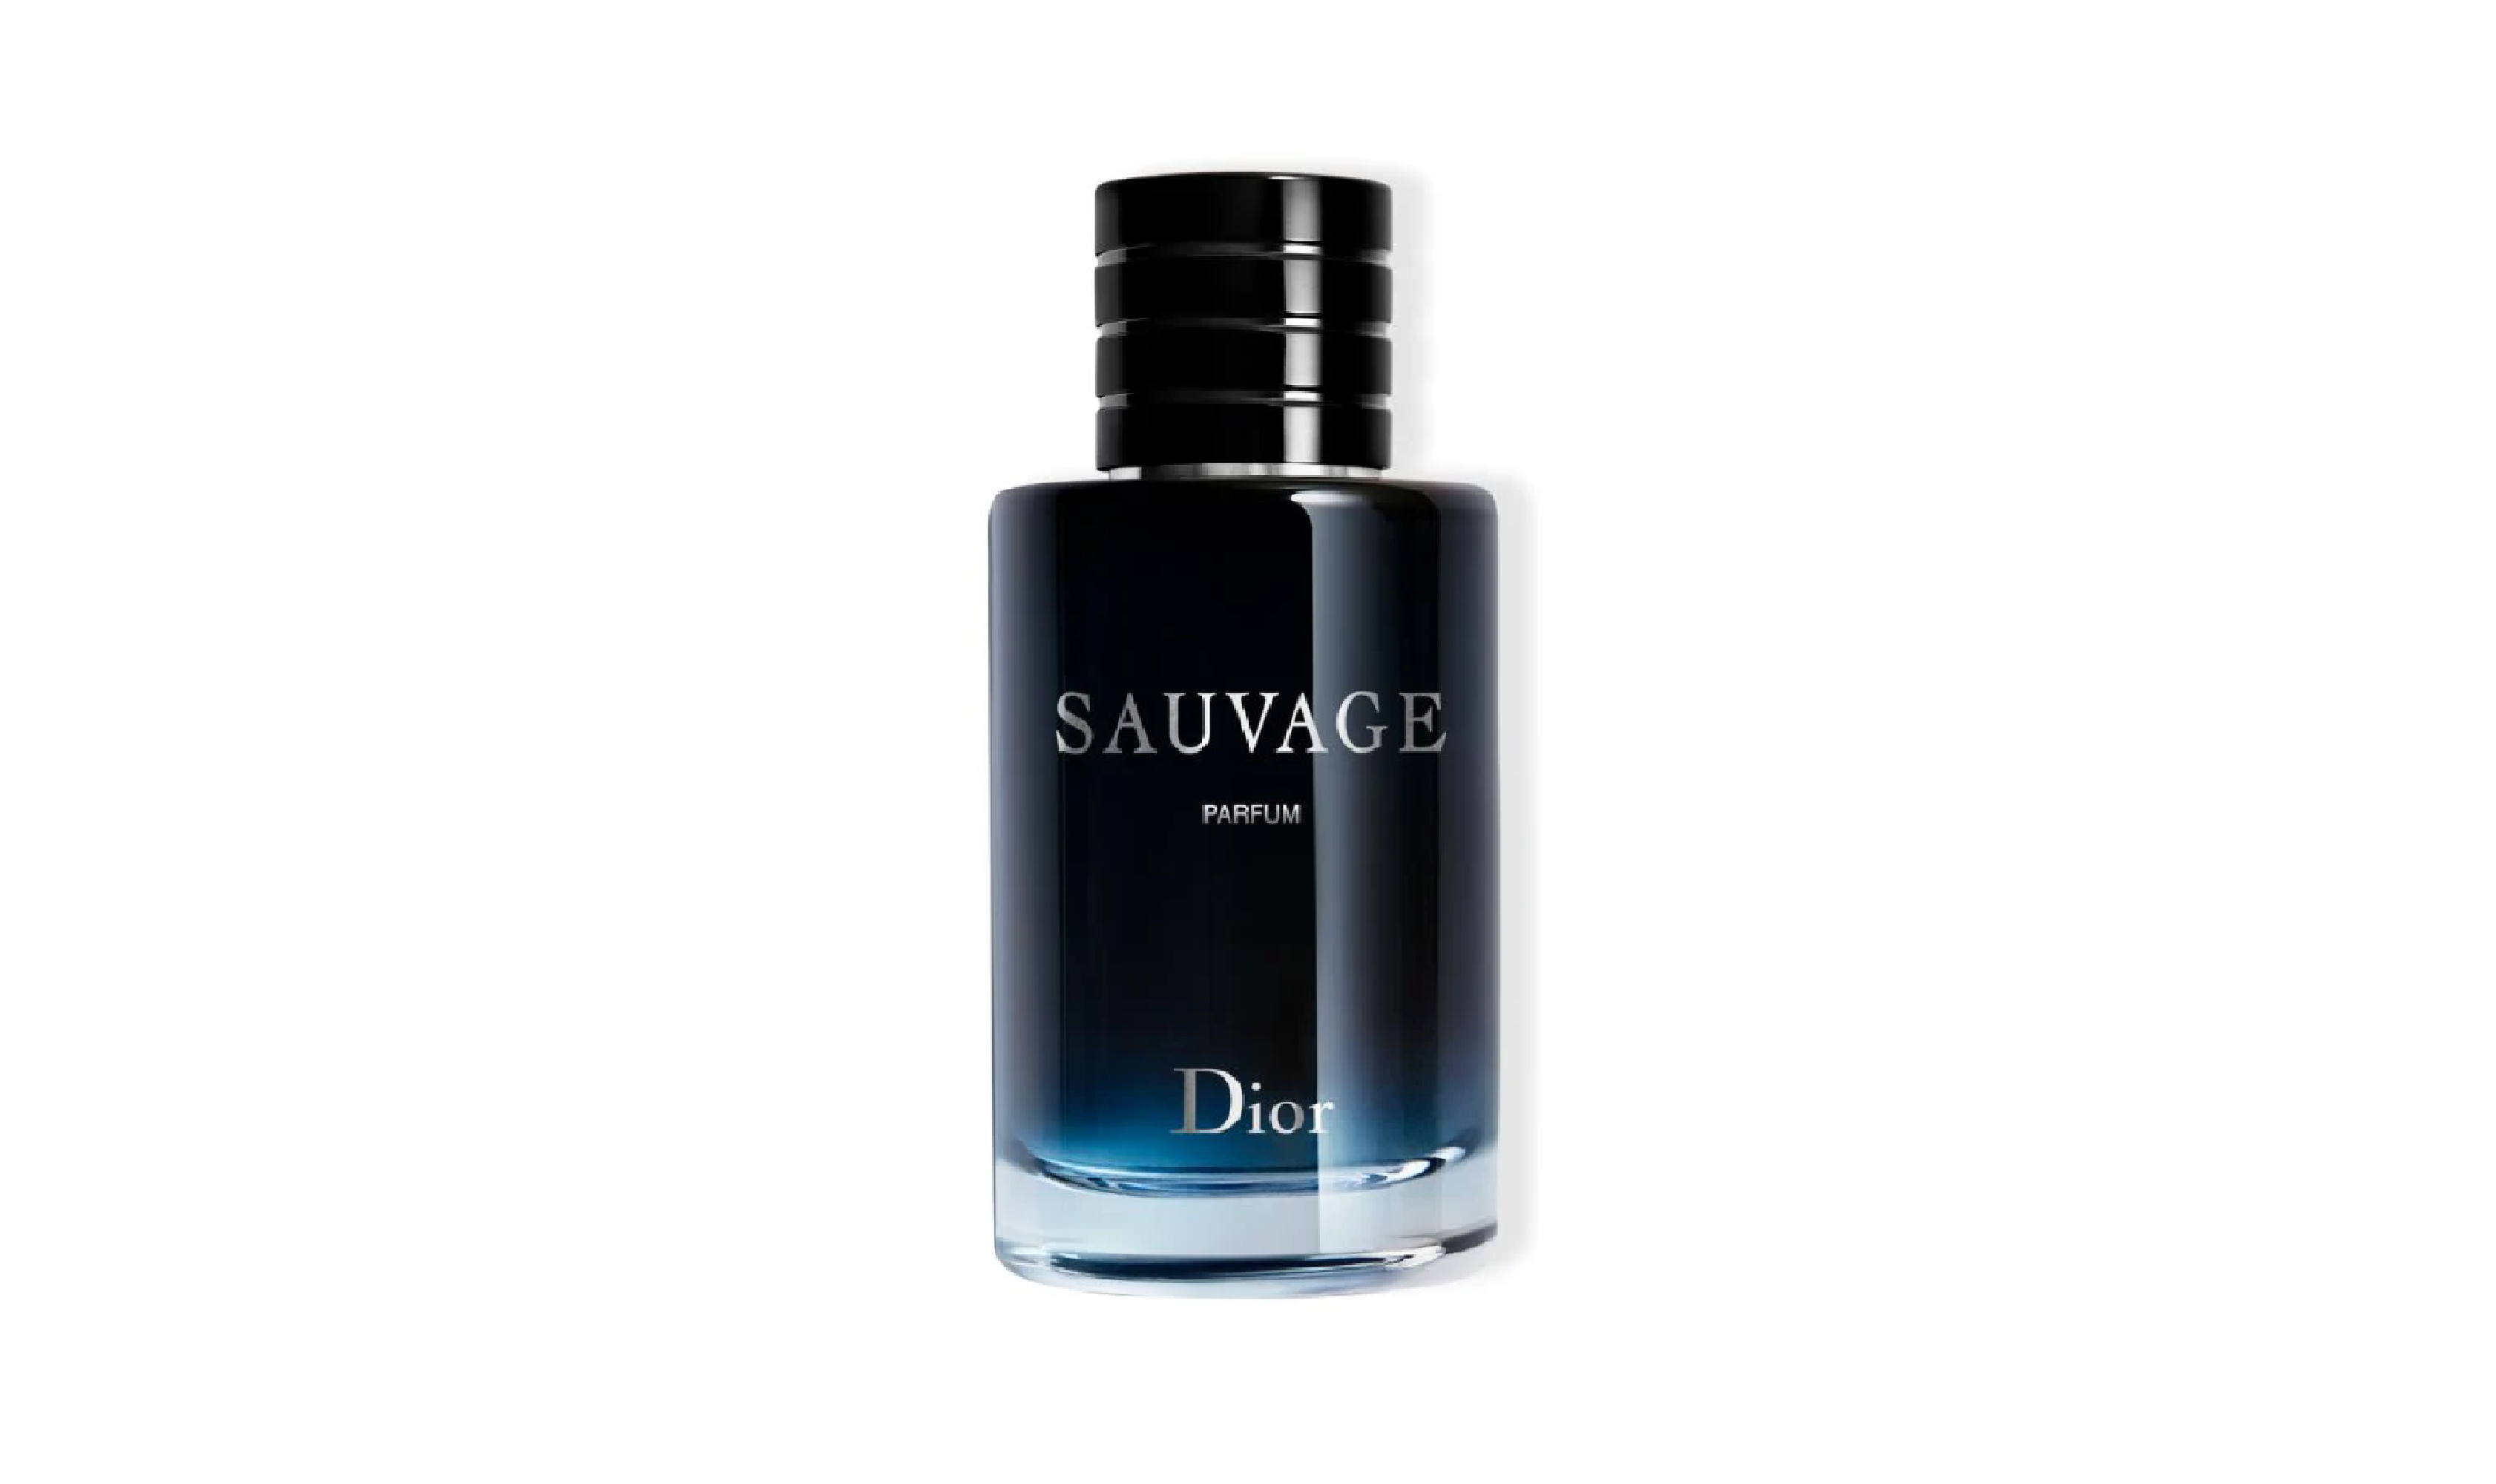 SAUVAGE (Dior香水)